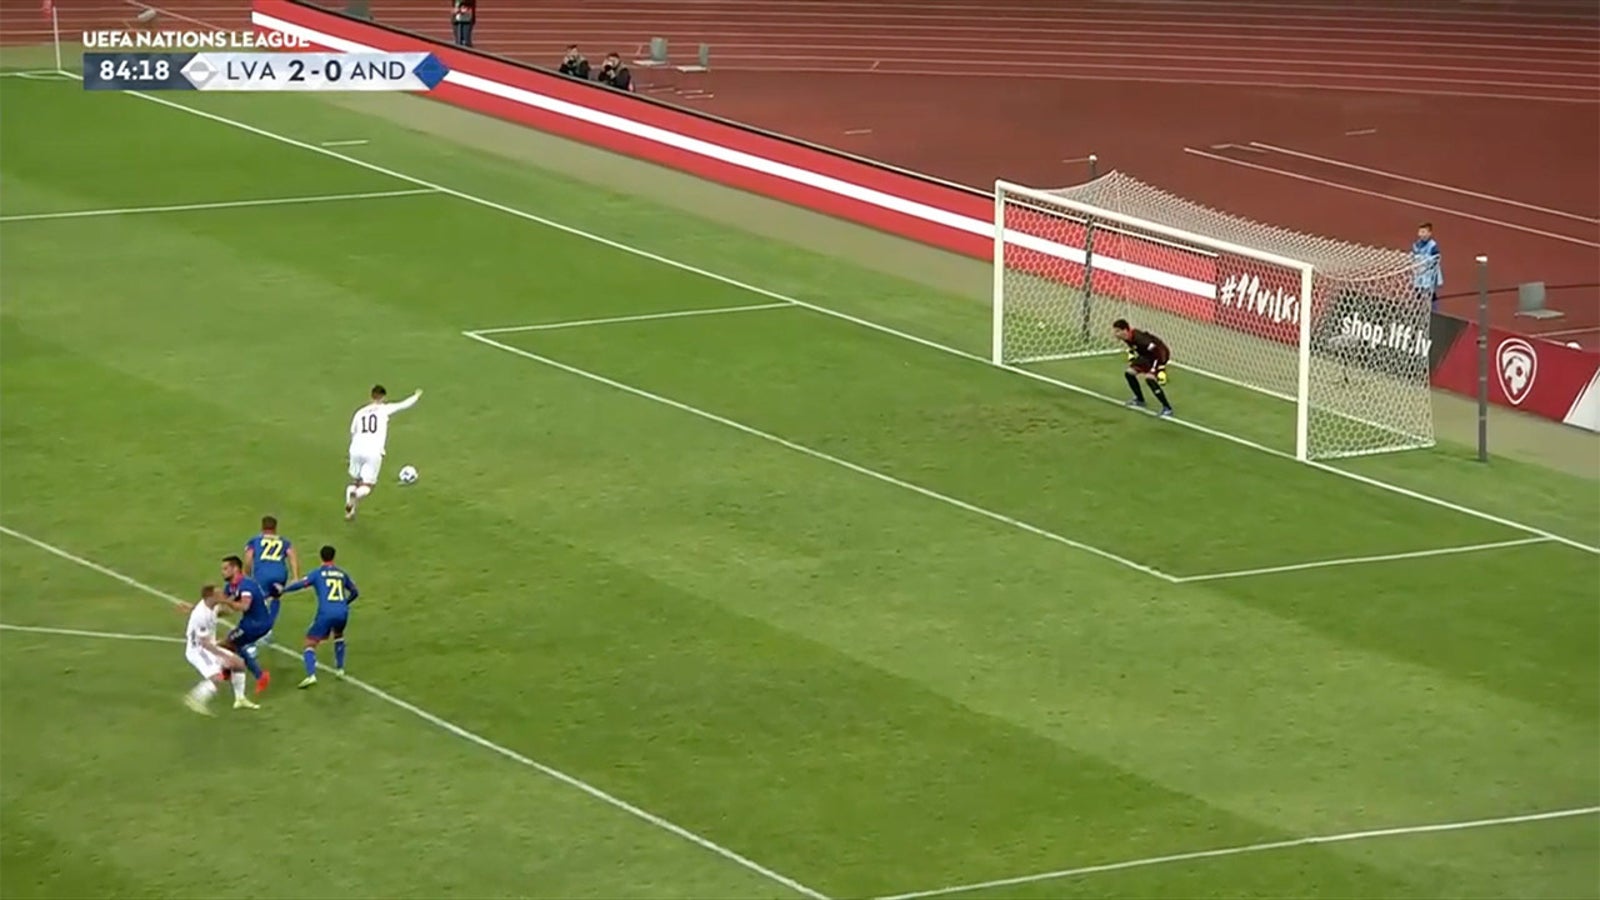 Jānis Ikaunieks' penalty strike adds to Latvia's lead over Andorra, 3-0